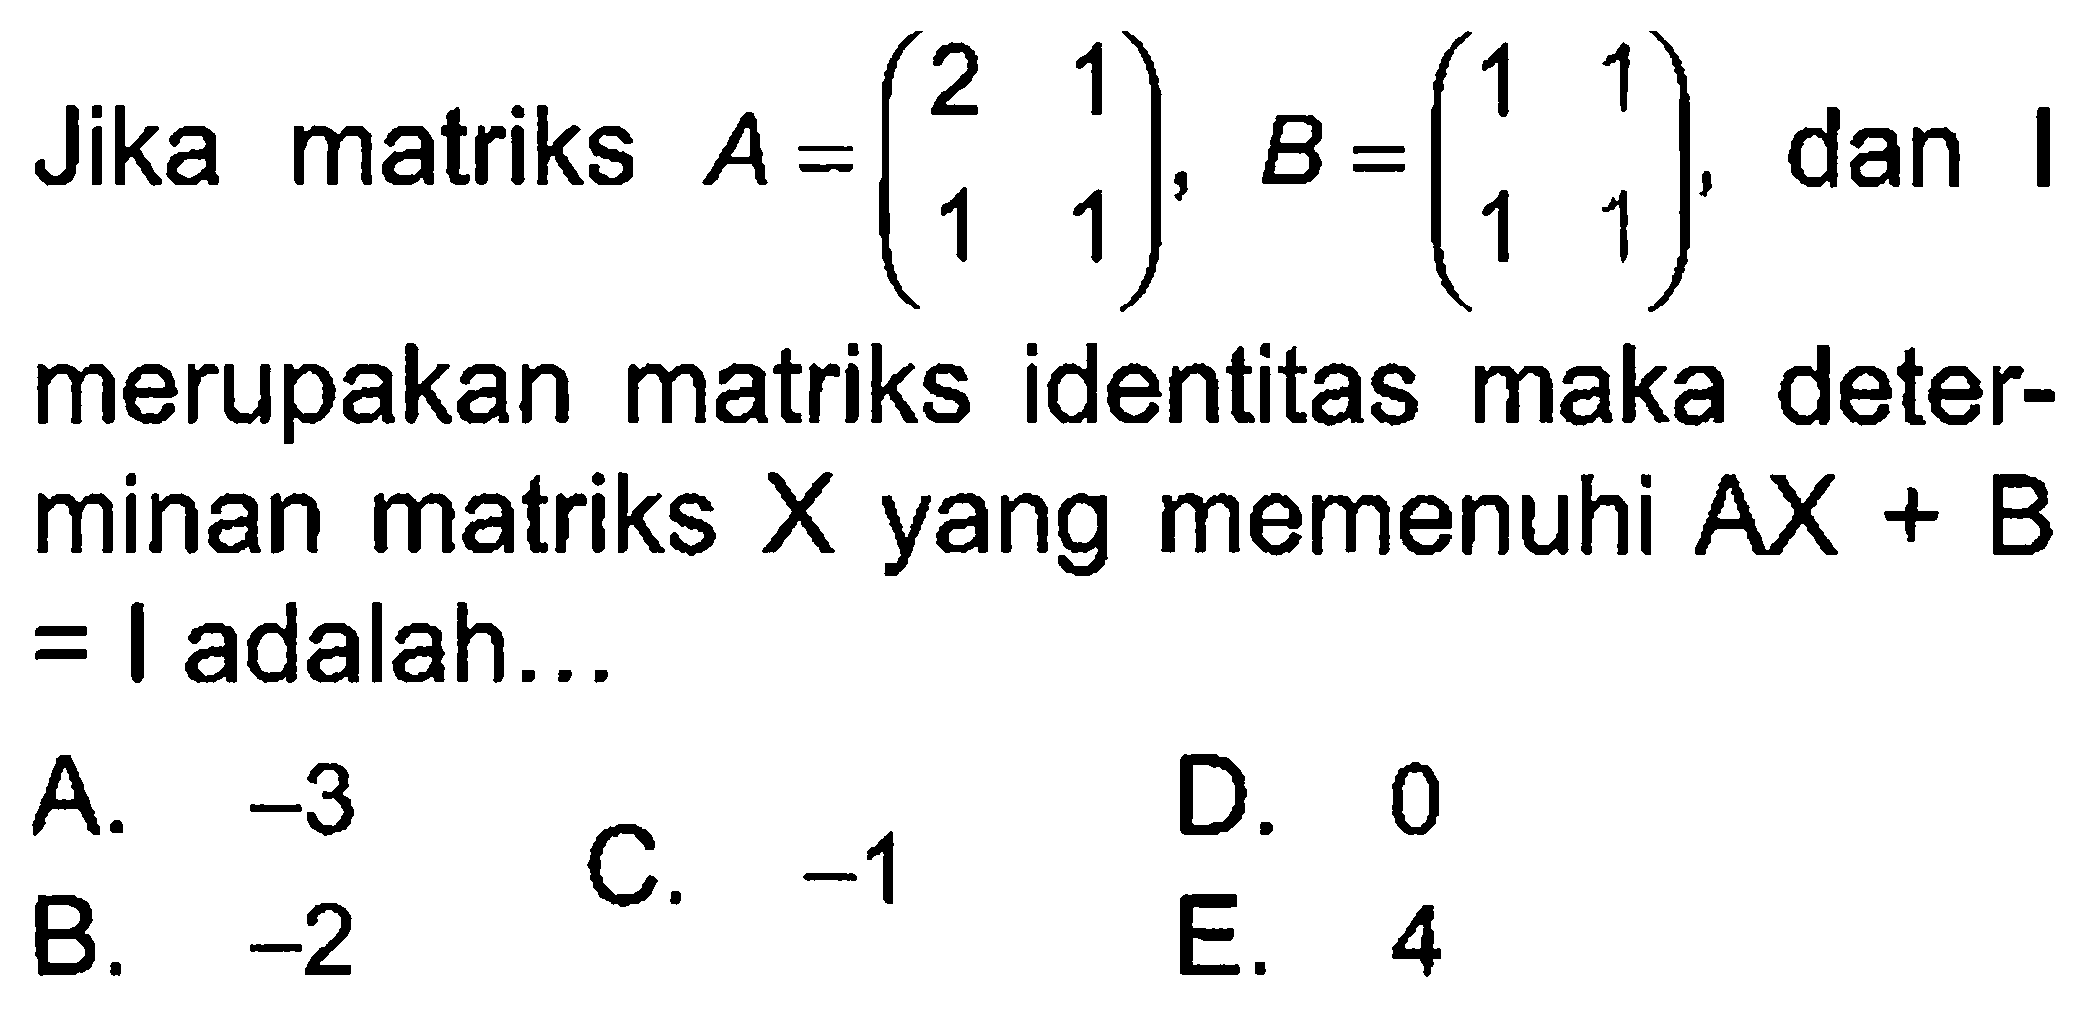 Jika matriks A=(2 1 1 1), B=(1 1 1 1), dan I merupakan matriks identitas maka deter- minan matriks X yang memenuhi AX+B=I adalah...